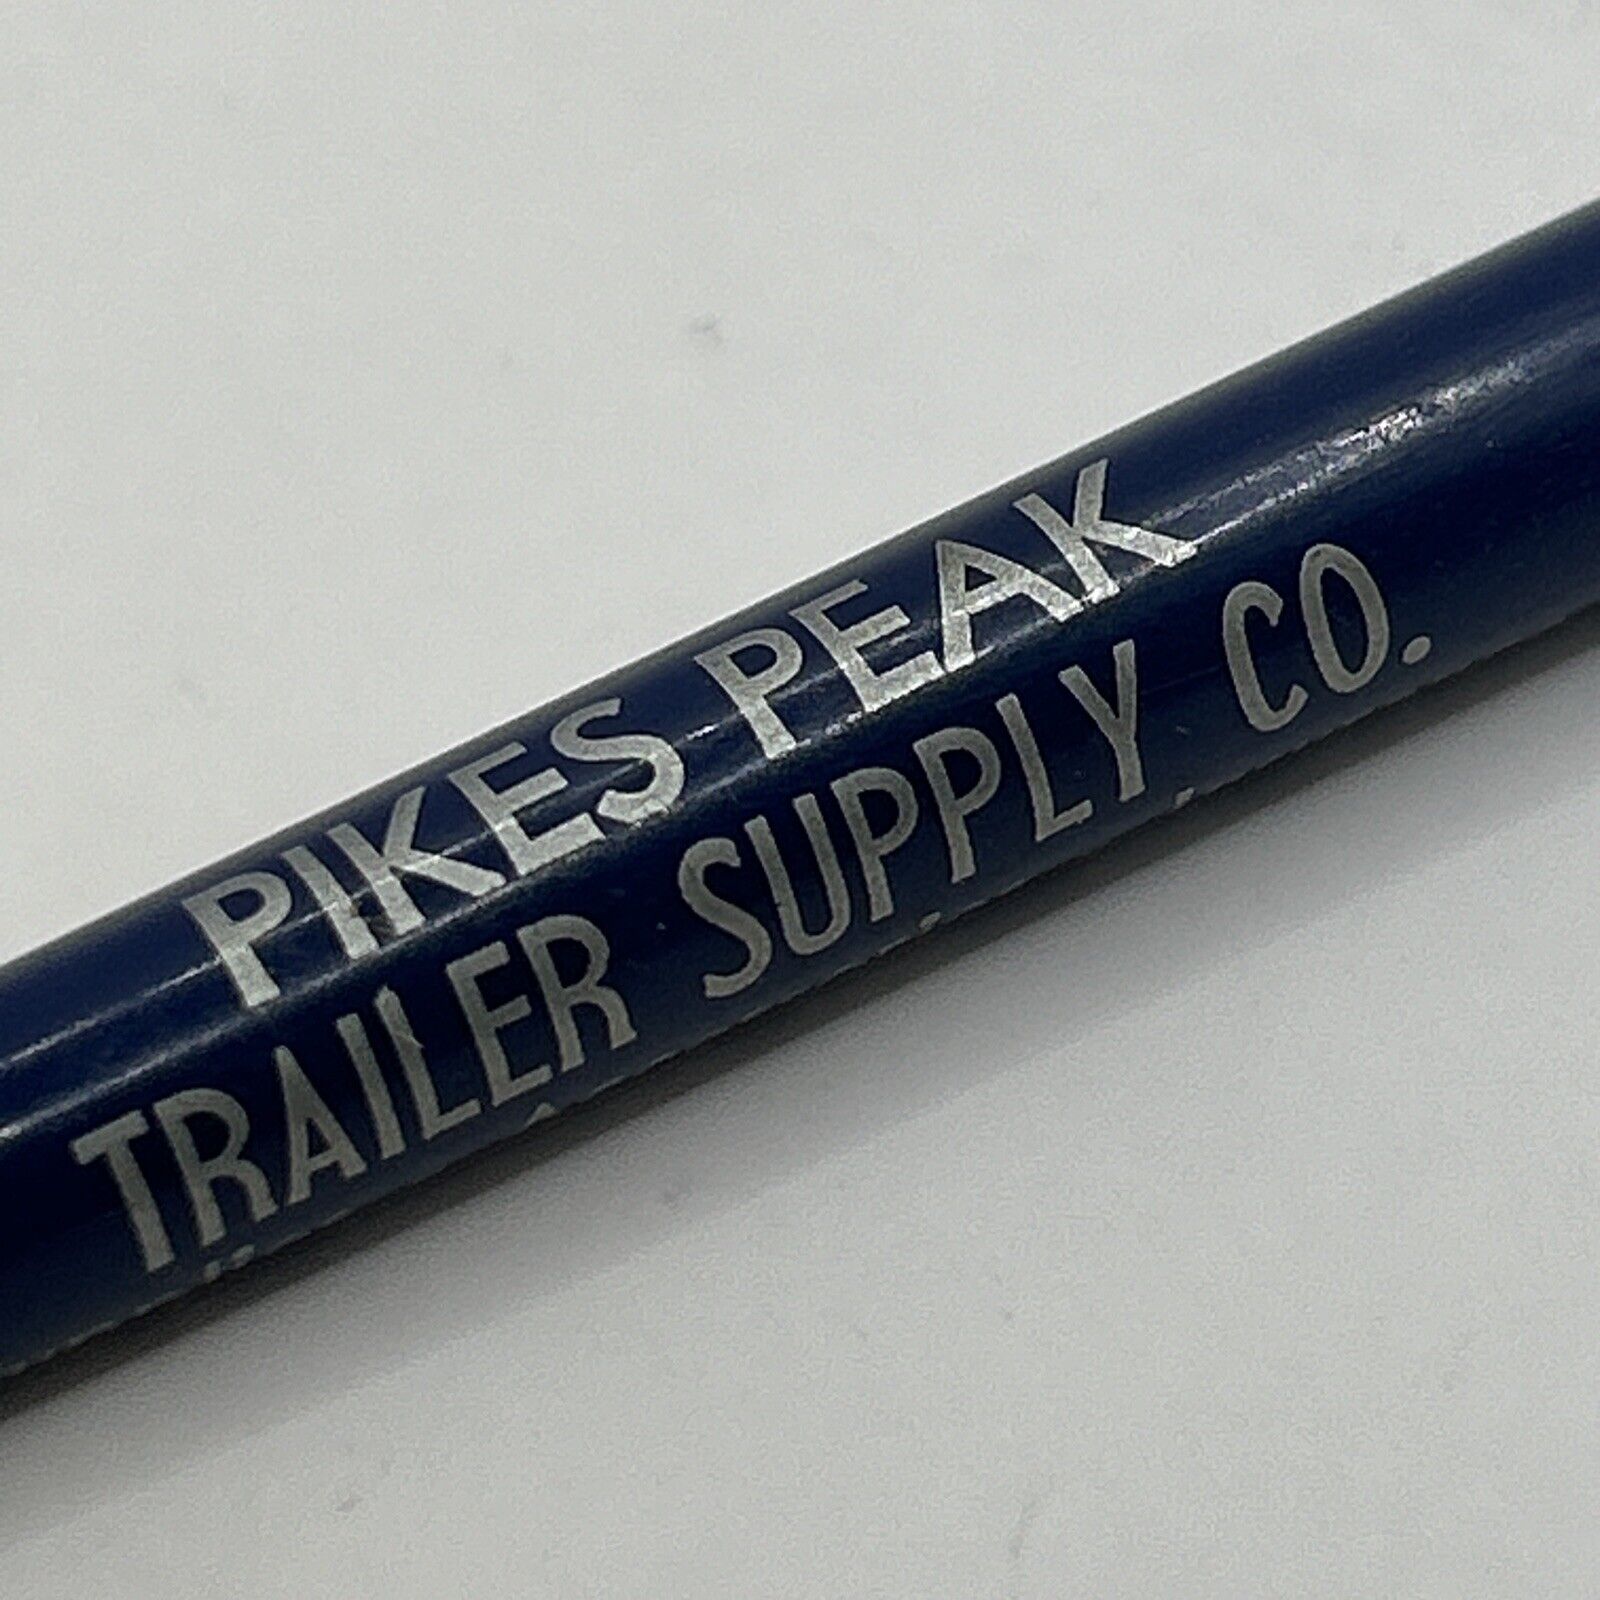 VTG Ballpoint Pen Pike's Peak Trailer Supply Co. Colorado Springs Jerry Phelps